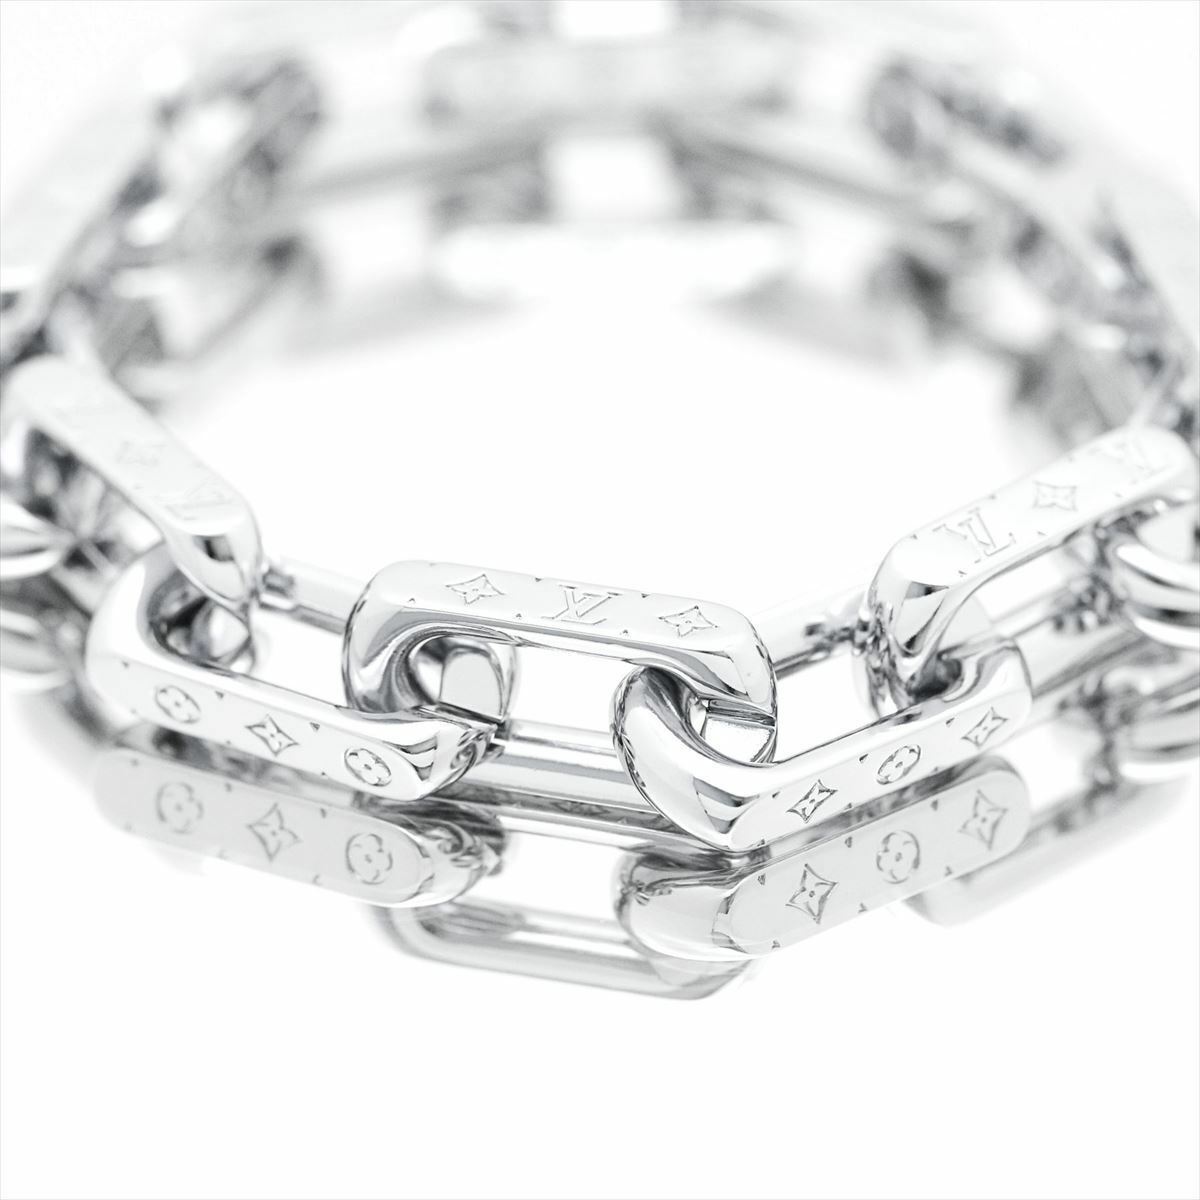 Products By Louis Vuitton: Monogram Links Chain Bracelet